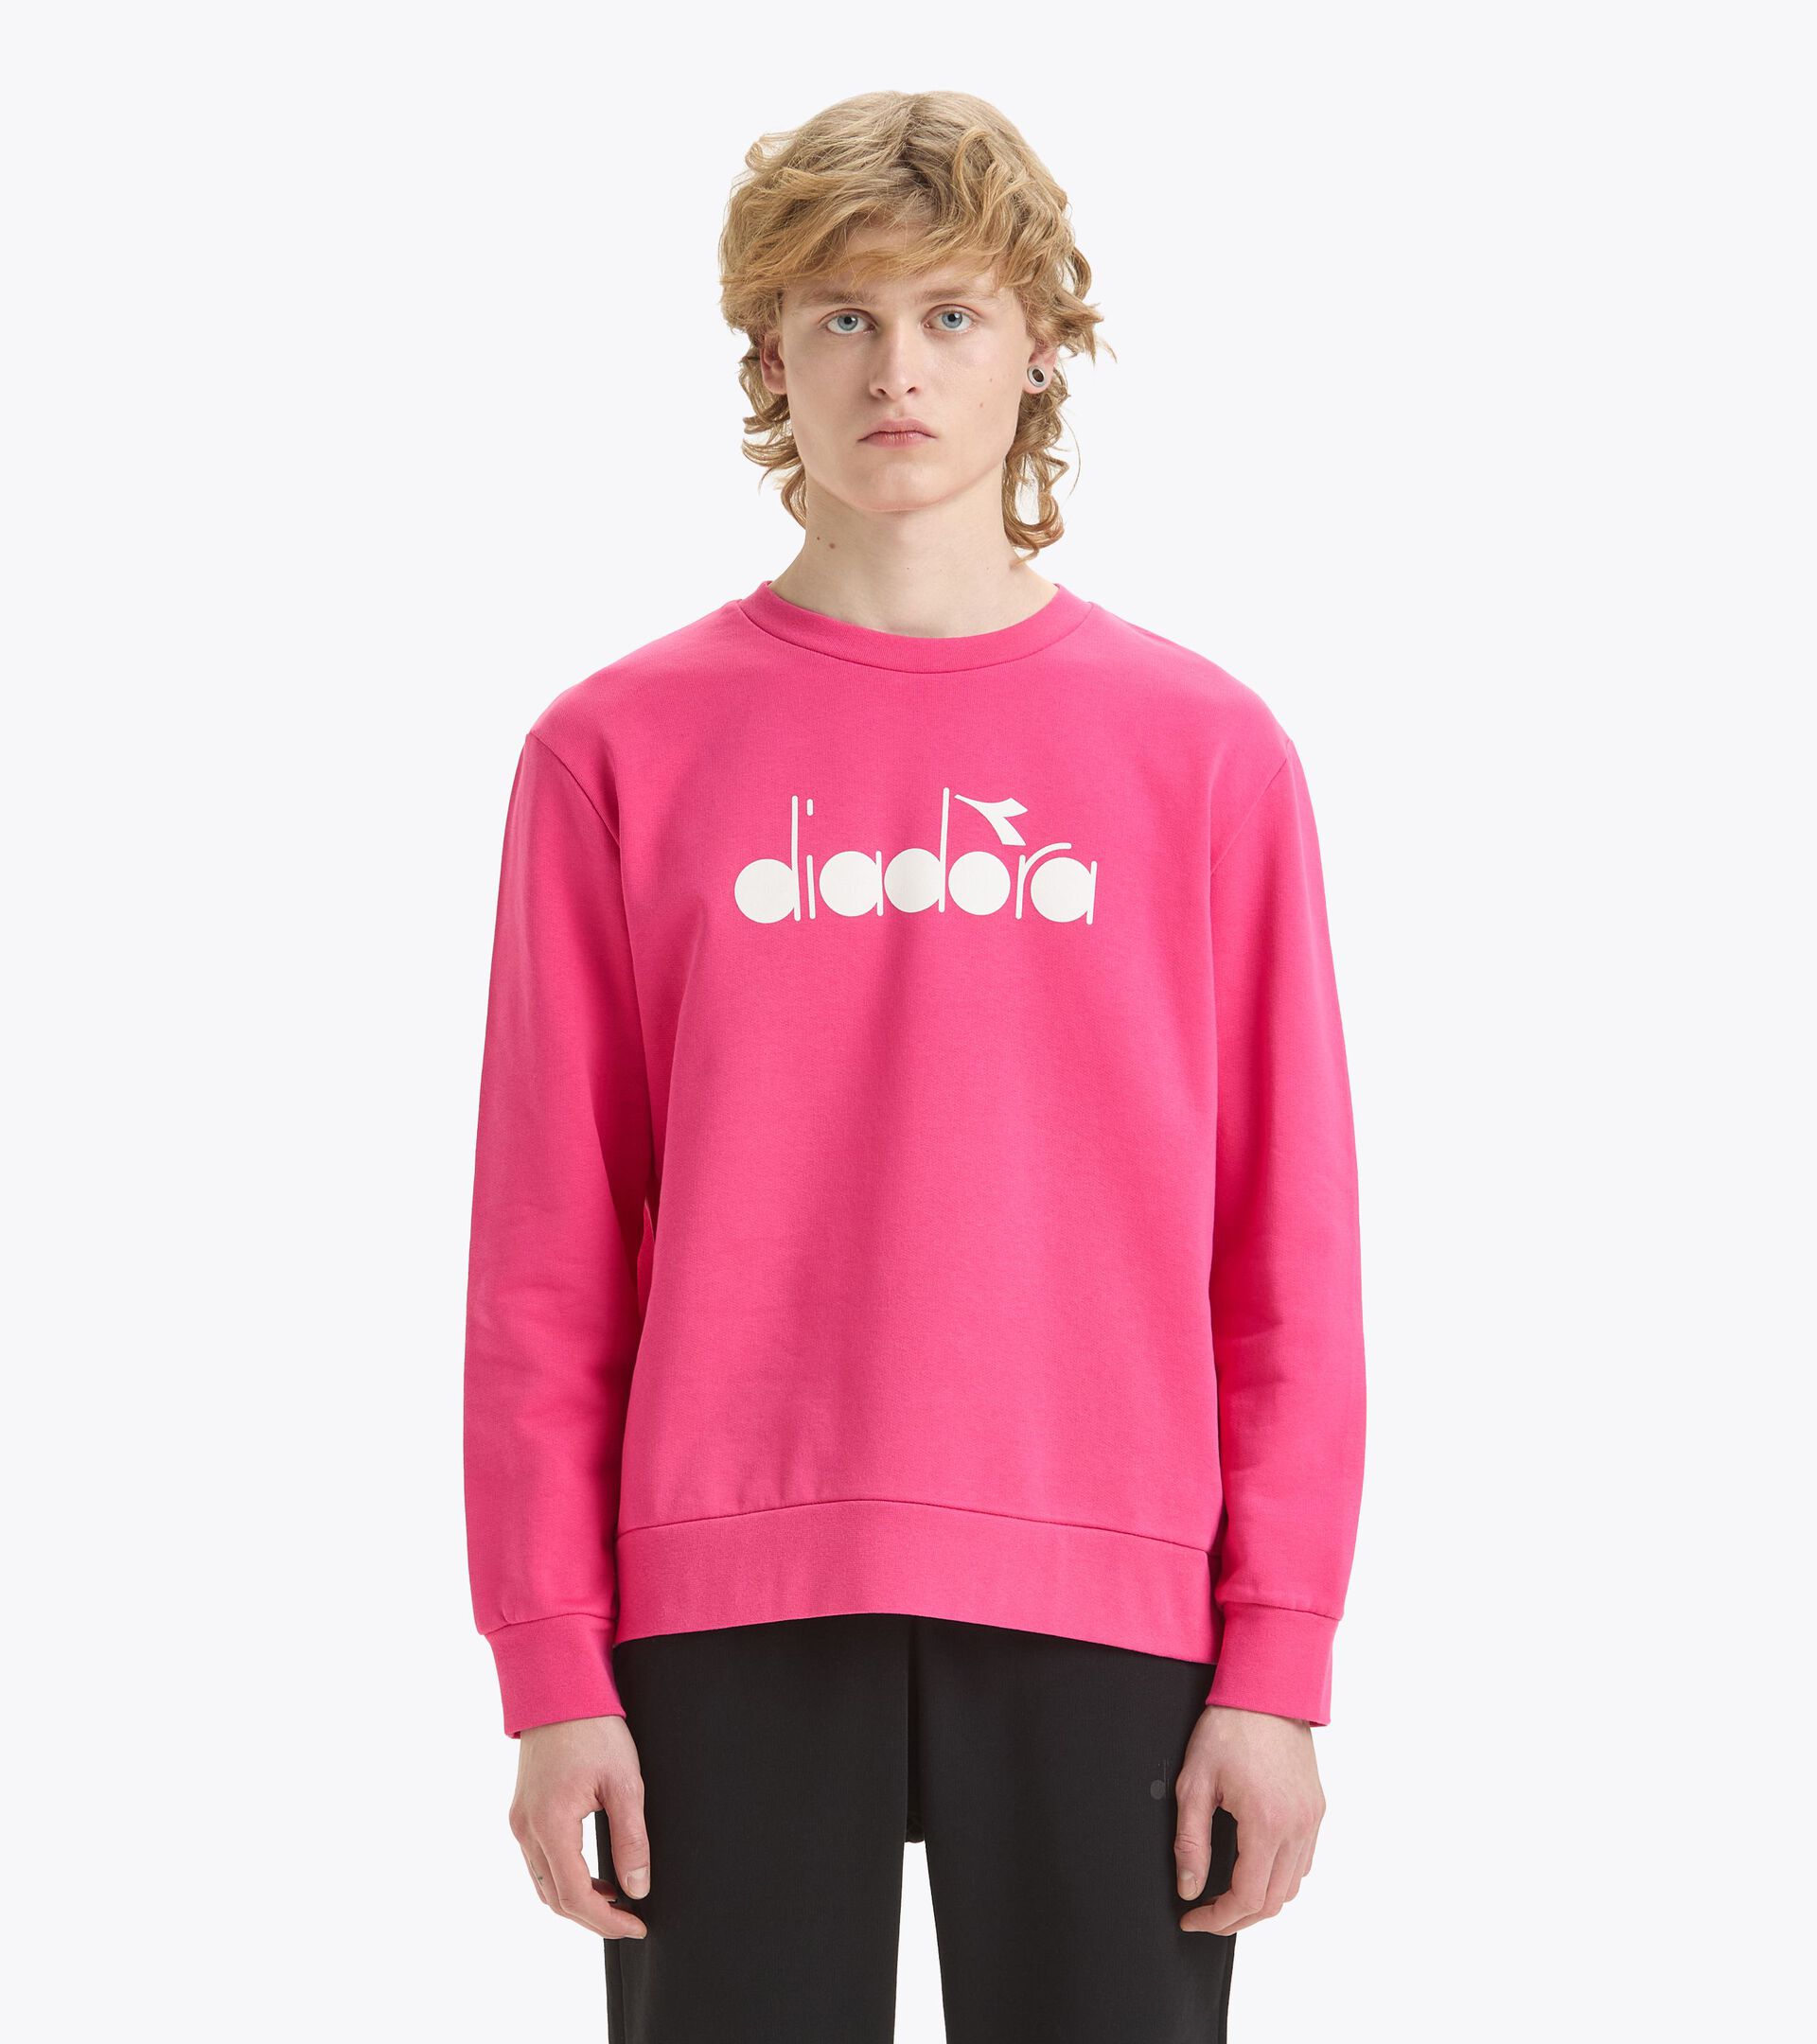 Sweatshirt - Made in Italy - Gender Neutral SWEATSHIRT CREW LOGO PINK SORBET - Diadora